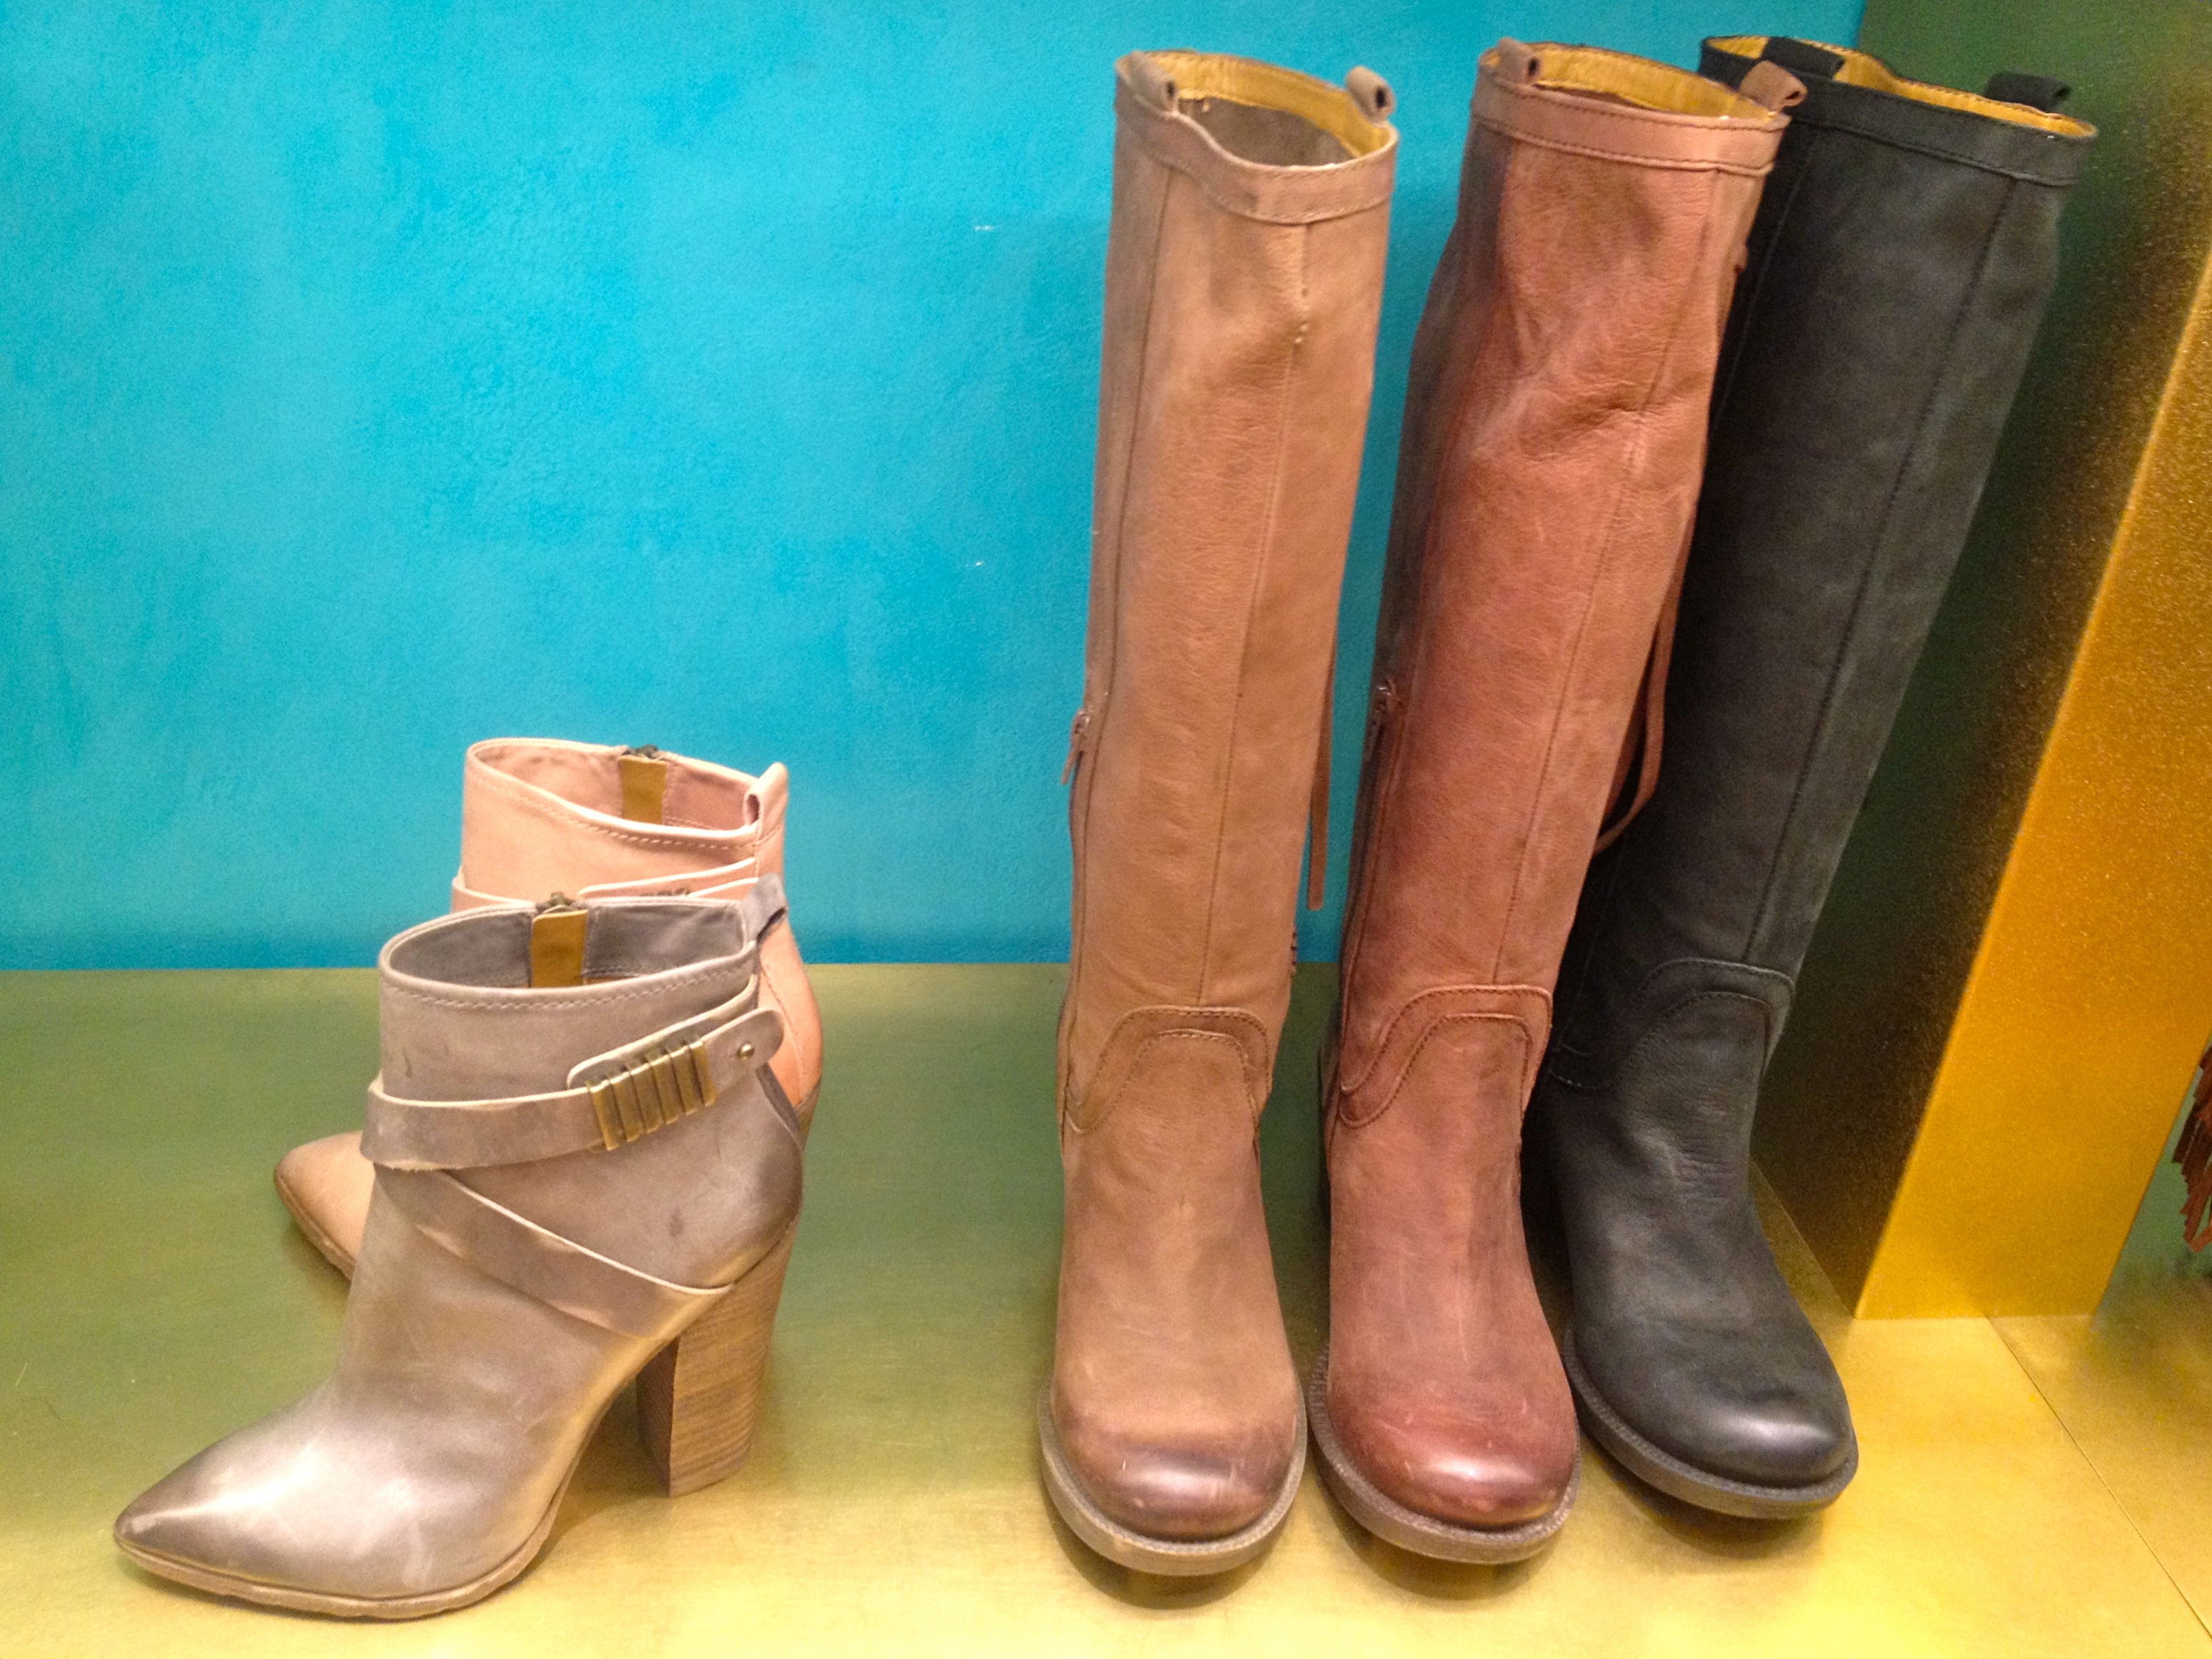 nine west vintage america boots